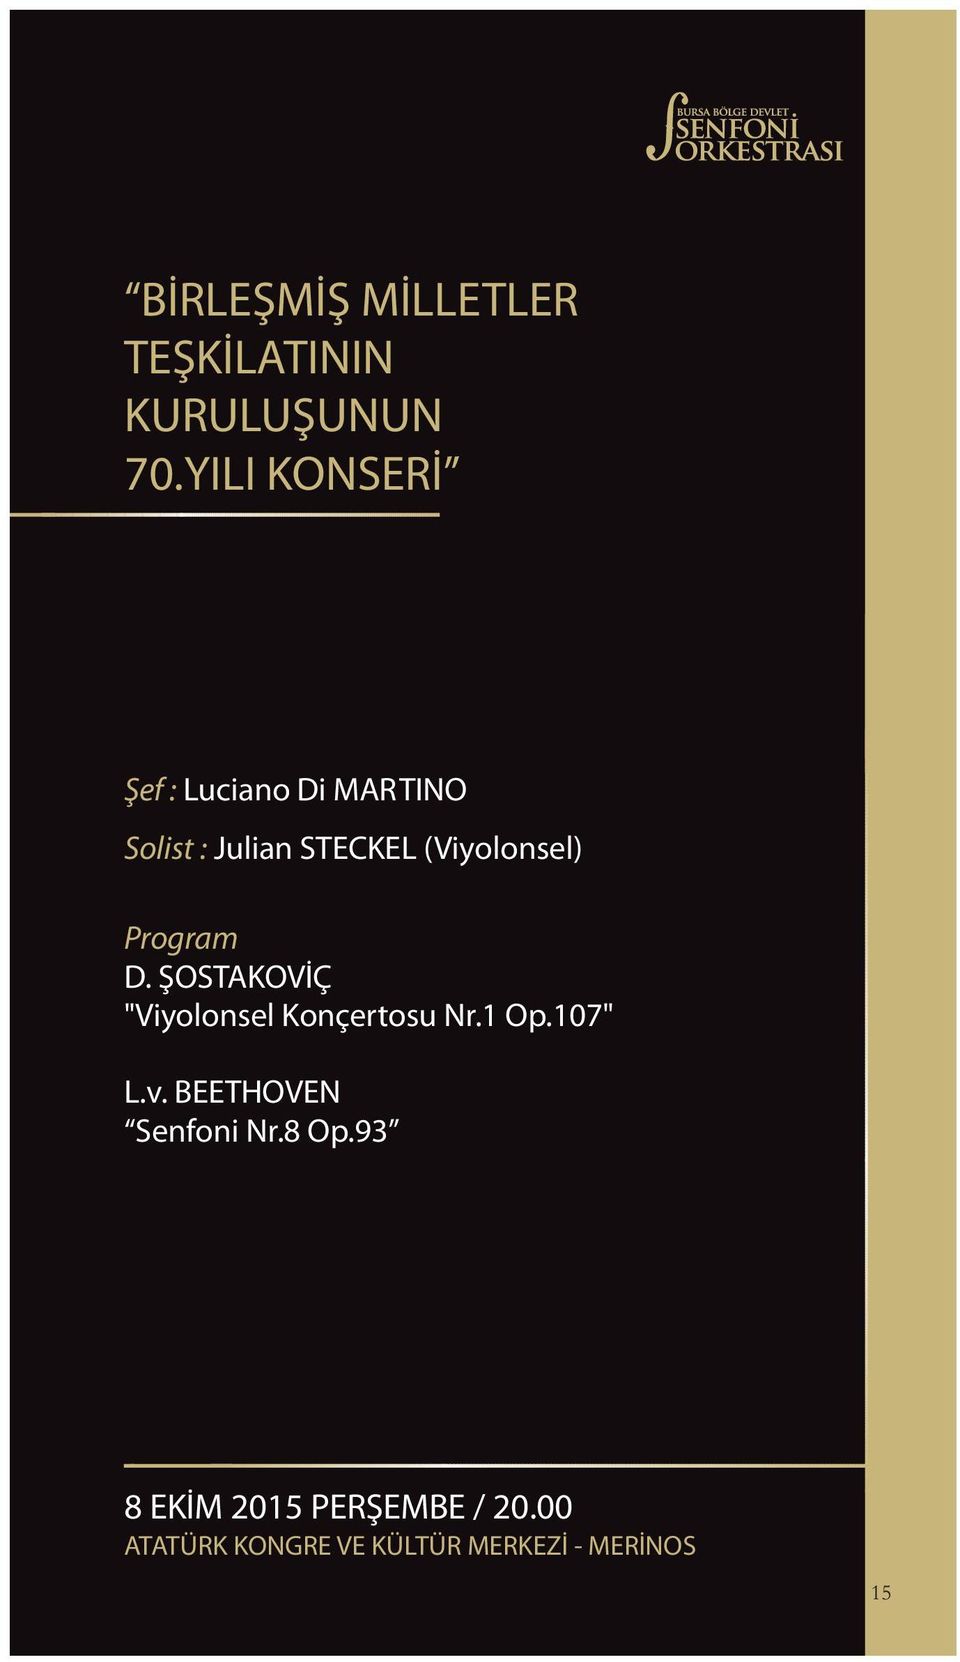 (Viyolonsel) Program D. ÞOSTAKOVÝÇ "Viyolonsel Konçertosu Nr.1 Op.107" L.